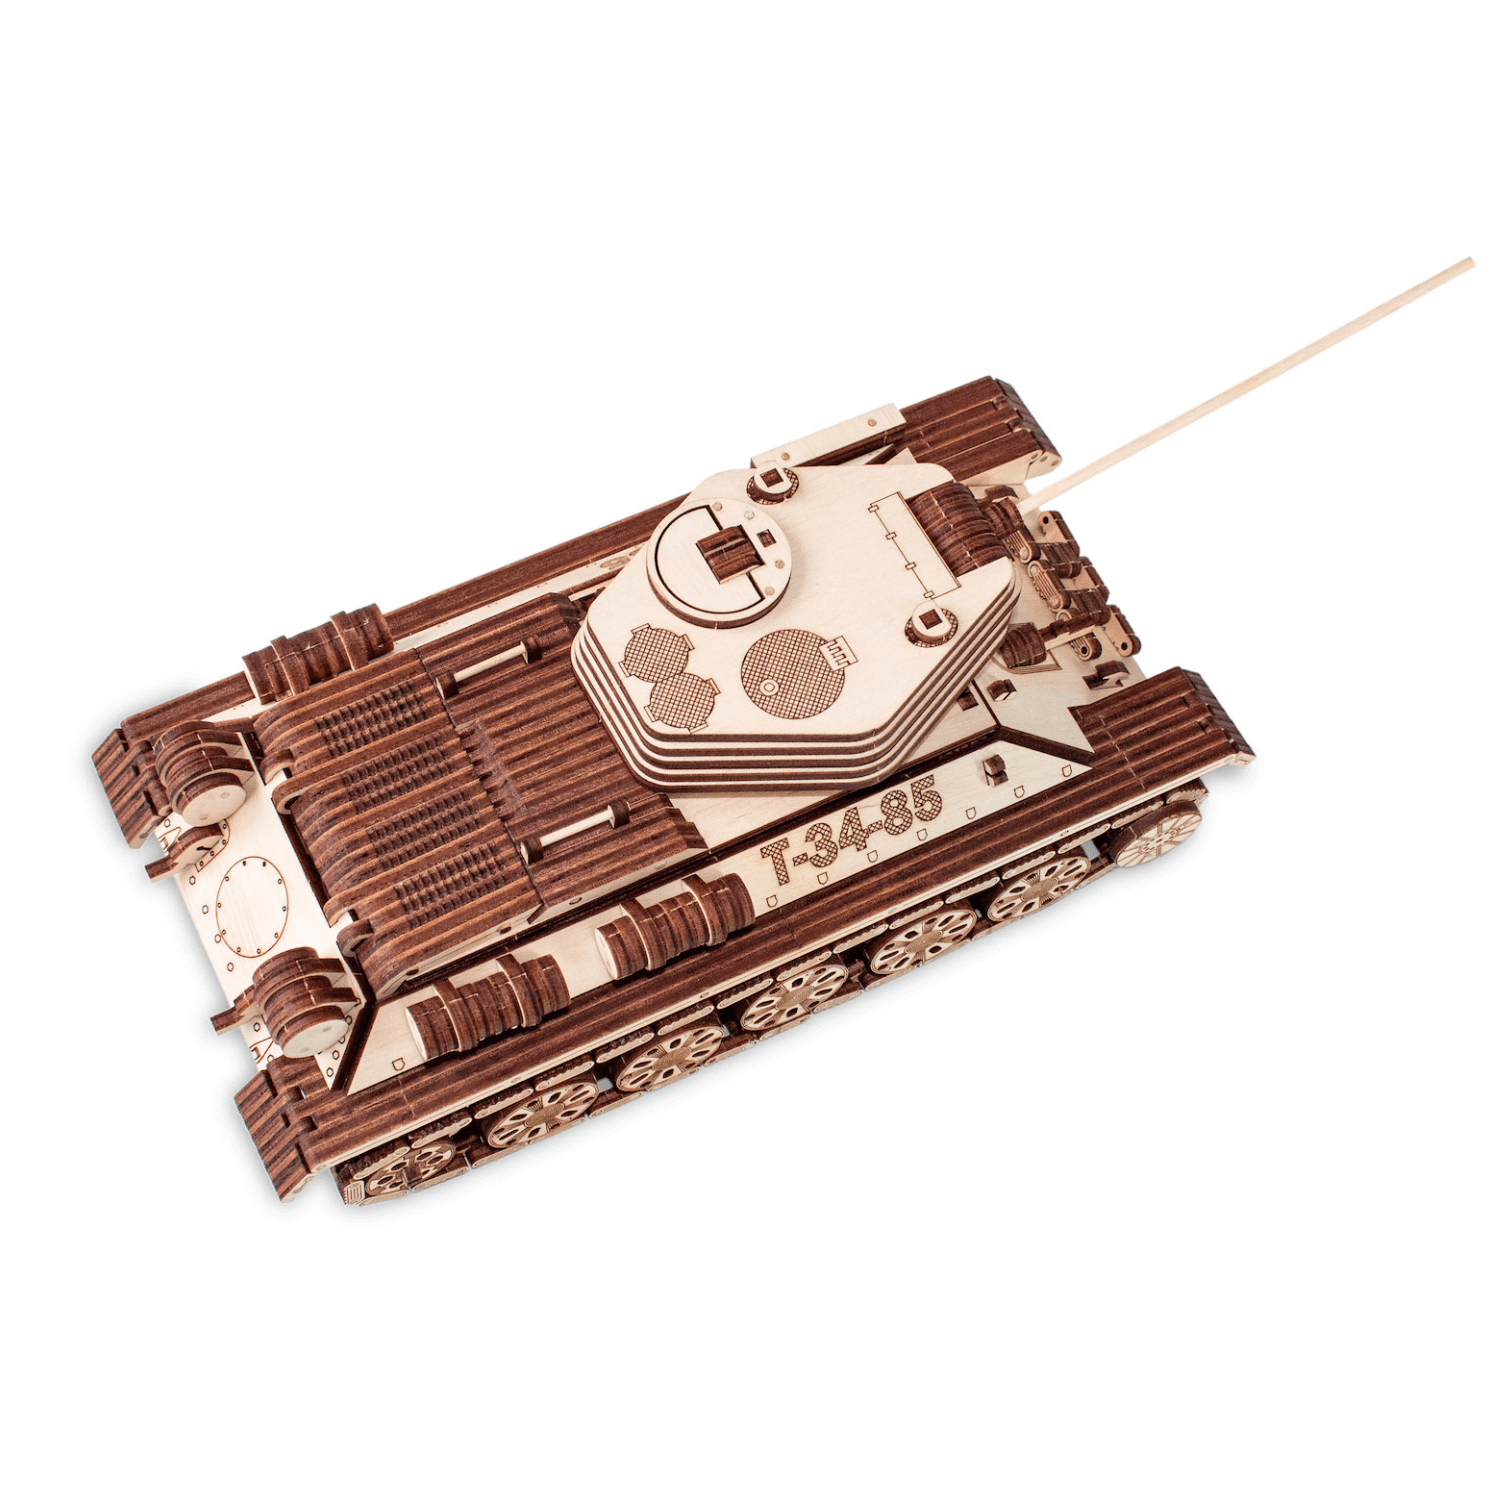 TANK T-34-85 | Panzer-Mechanisches Holzpuzzle-Eco-Wood-Art--